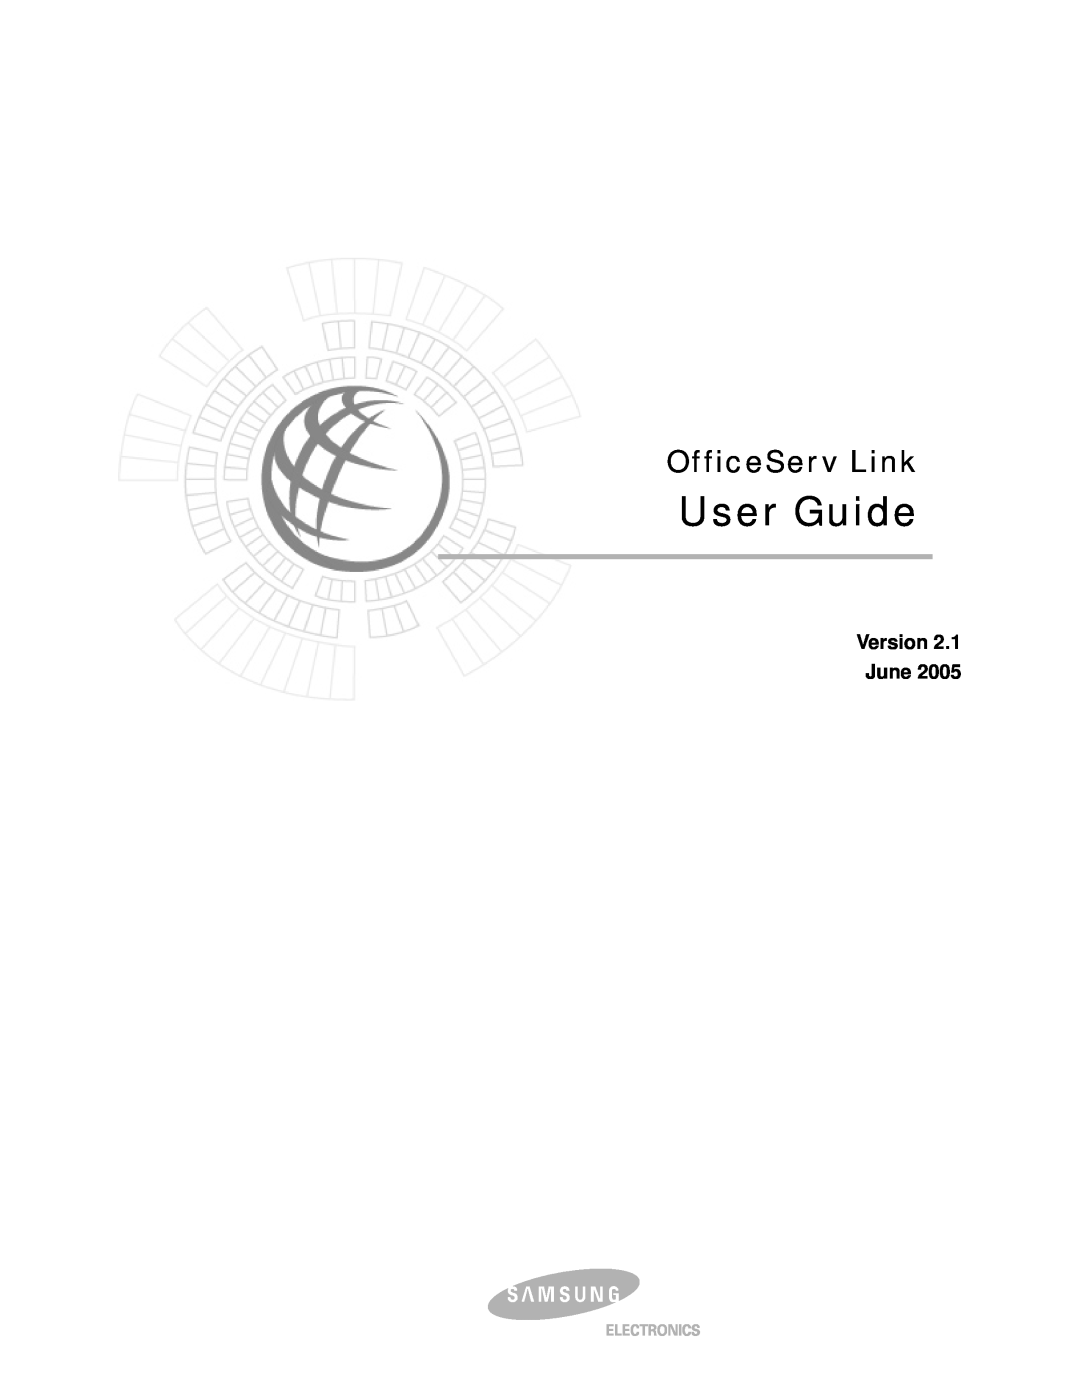 Samsung Version 2.1 manual Version June, User Guide, OfficeServ Link 